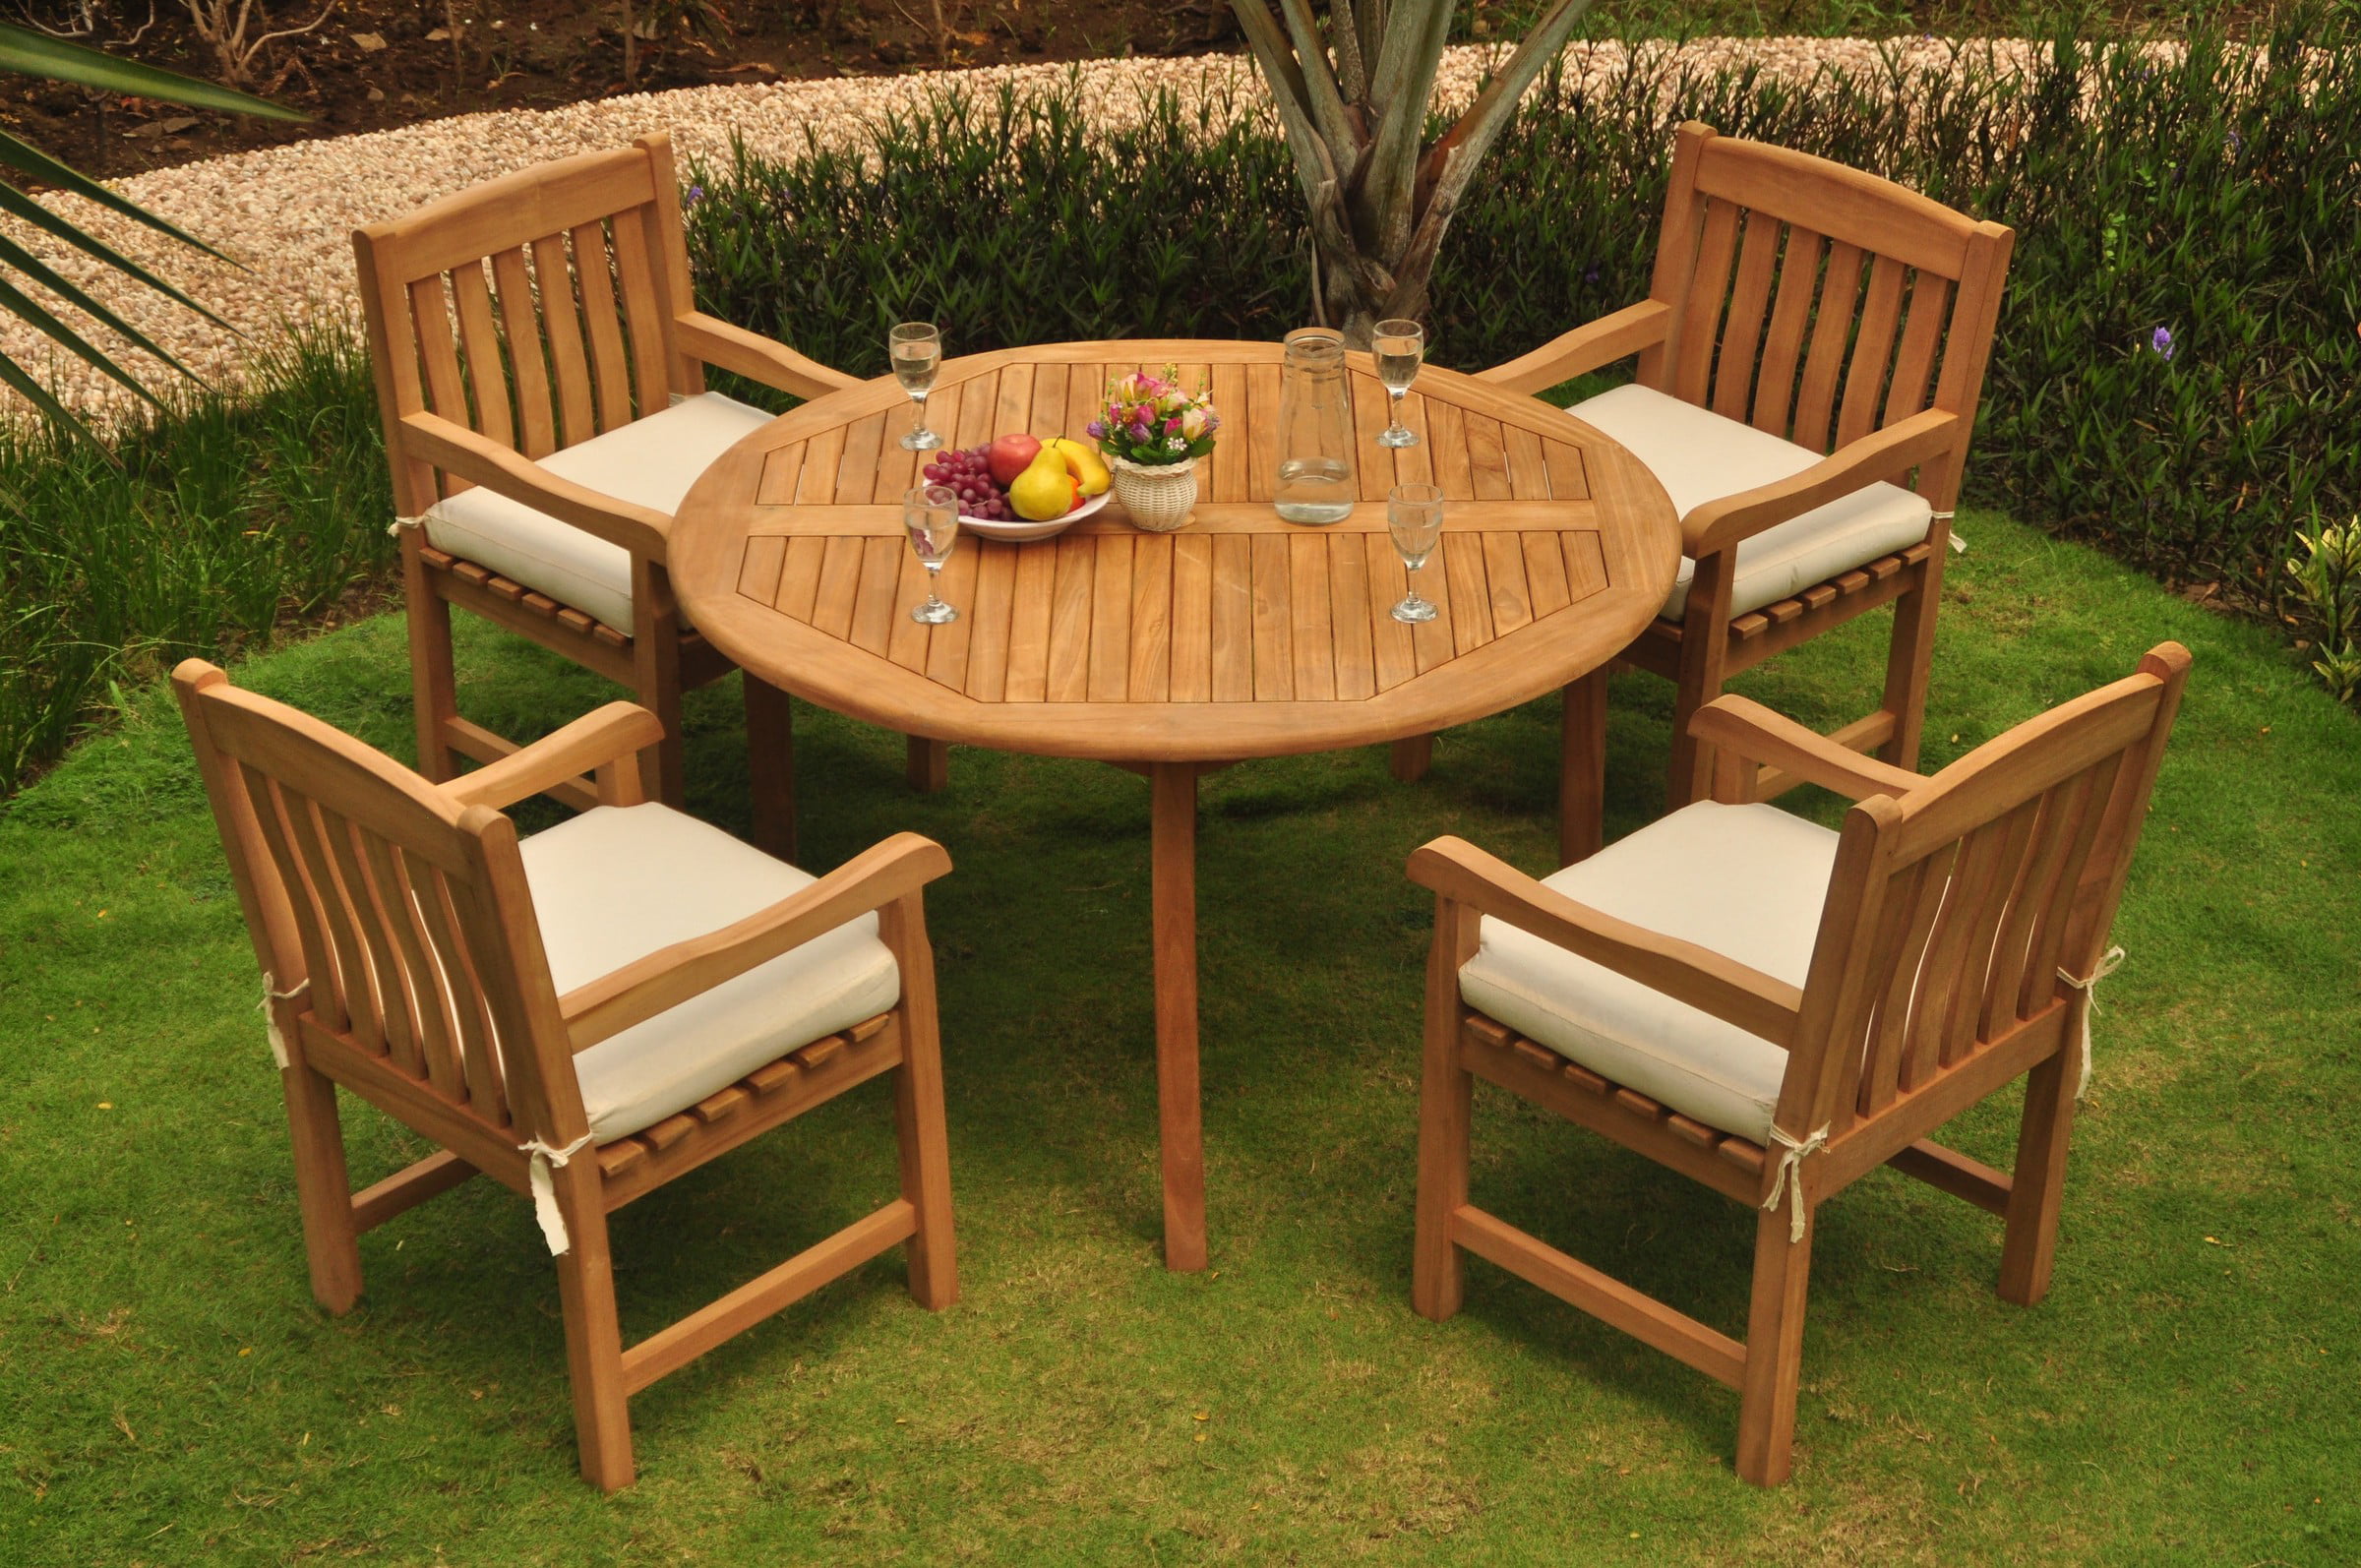  teak garden furniture sets